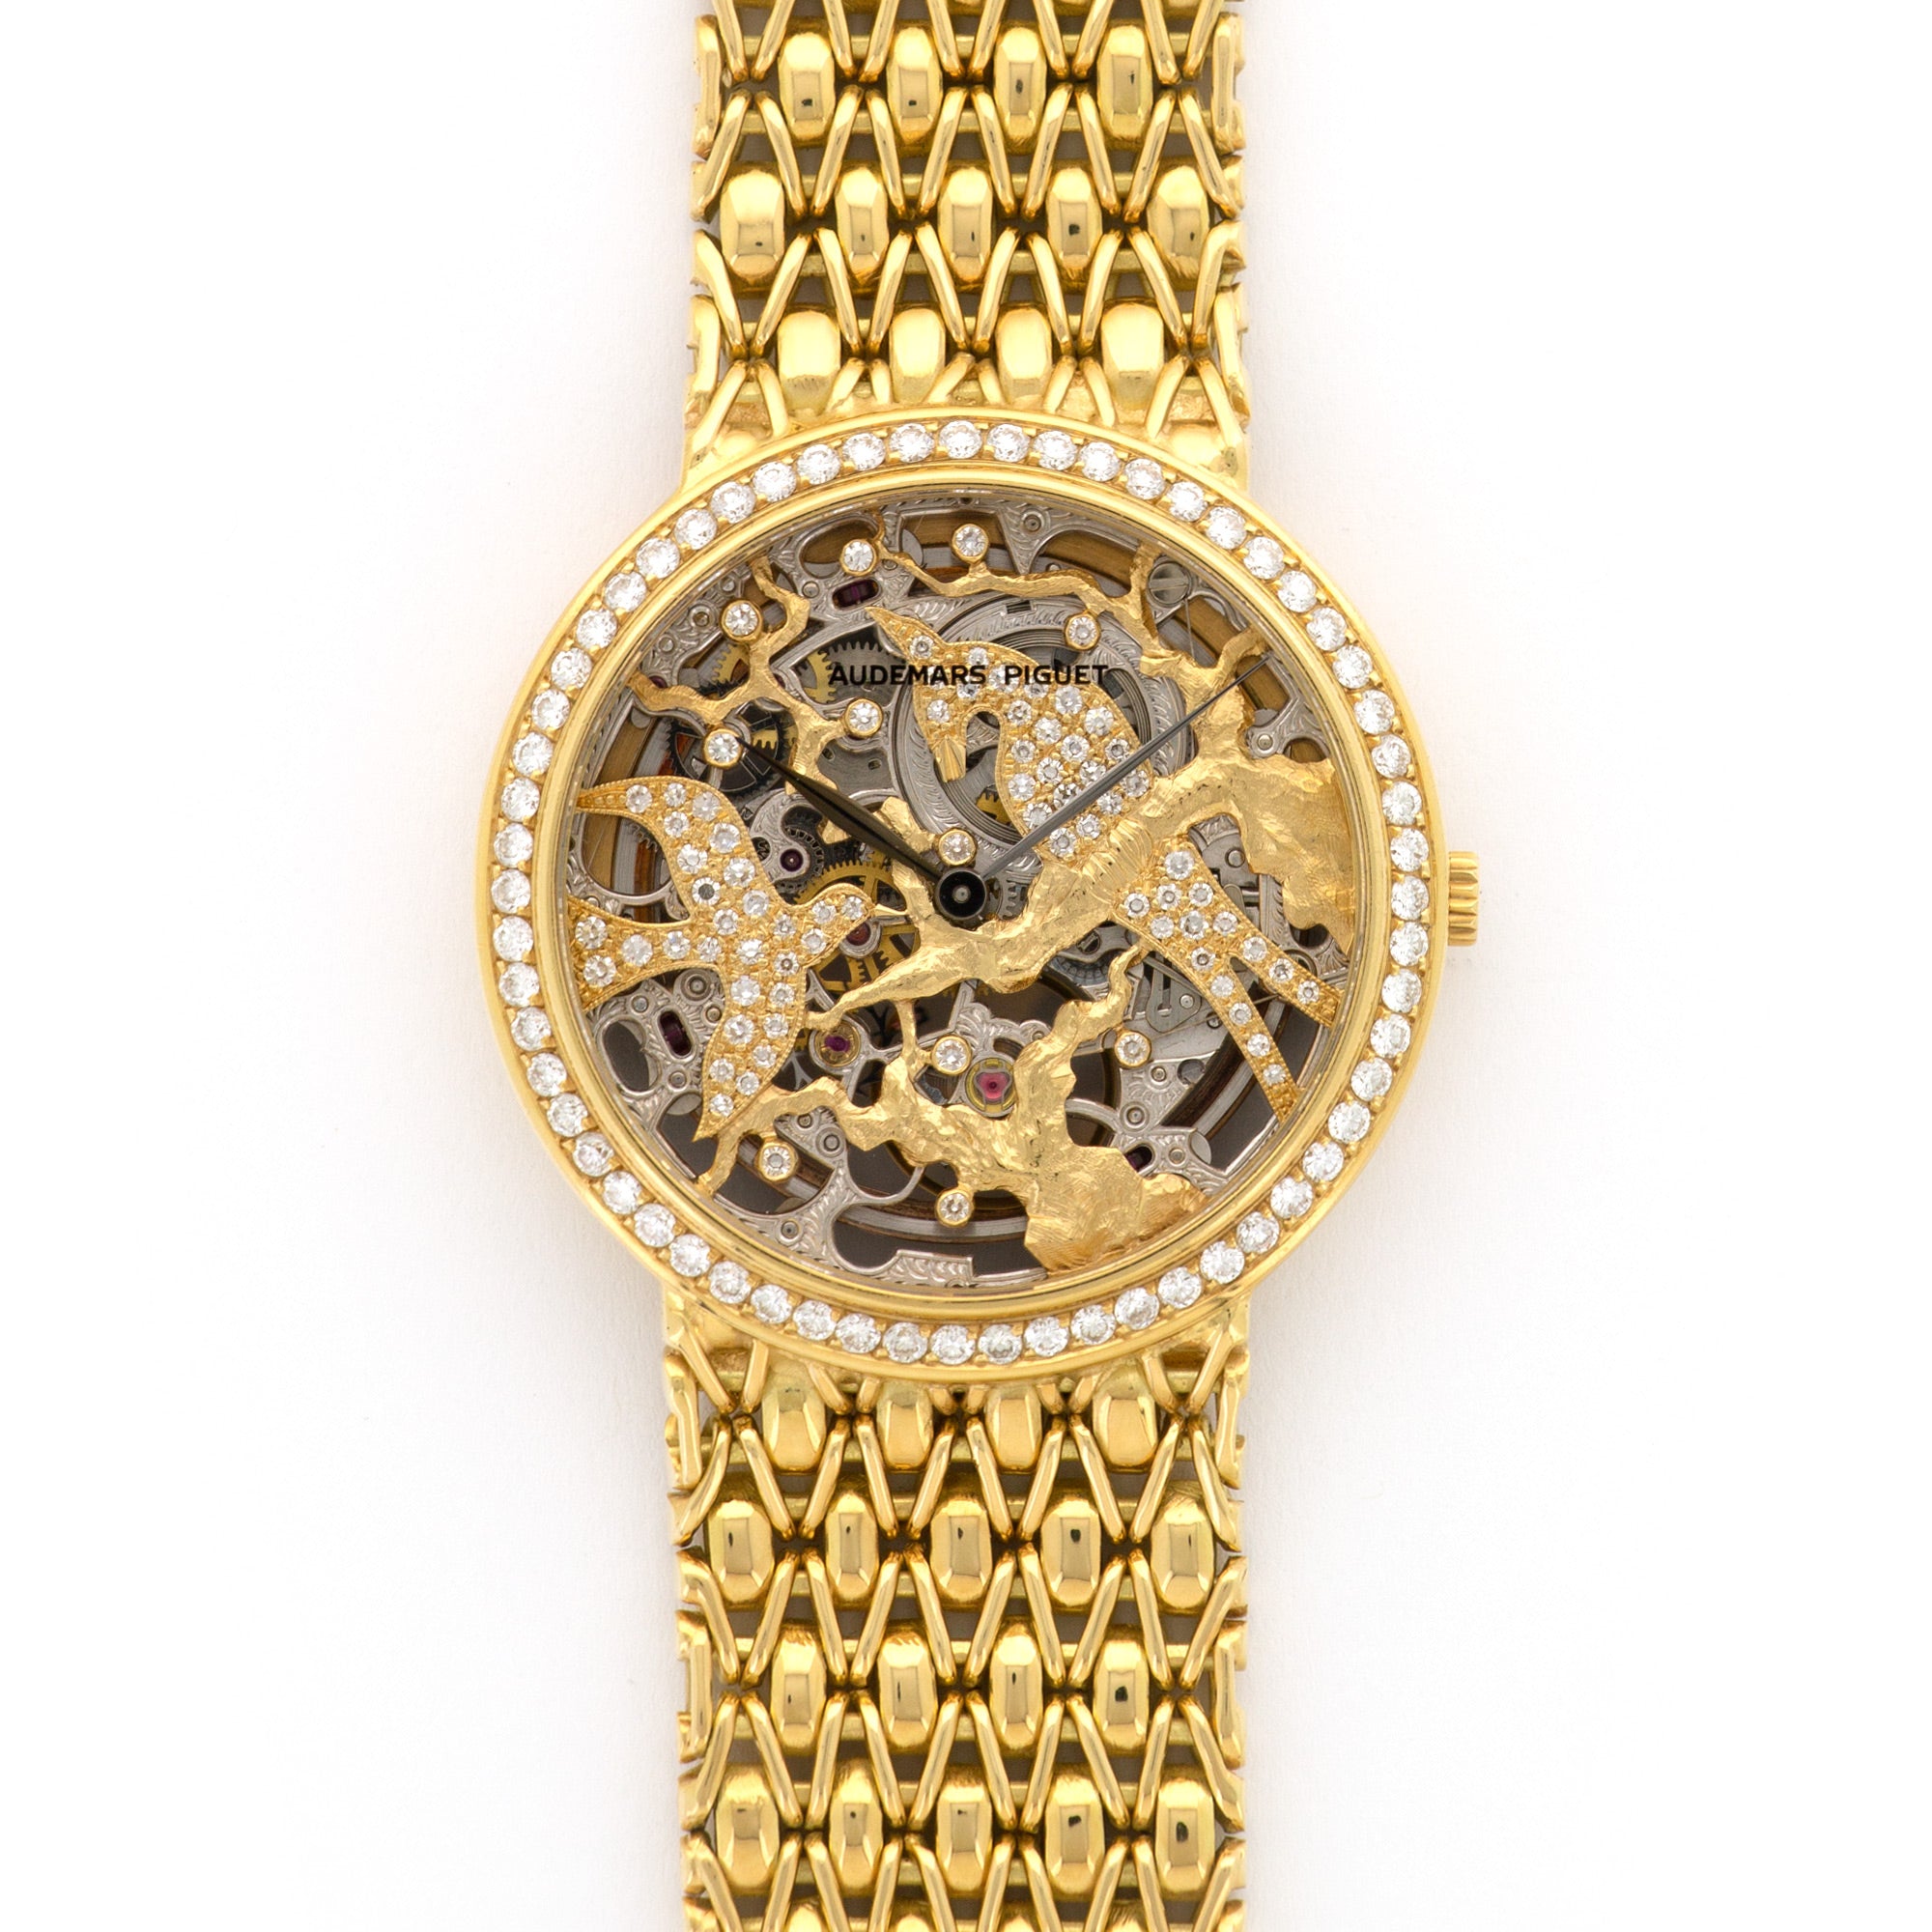 Audemars Piguet - Audemars Piguet Yellow Gold Skeletonized Diamond Birds Watch - The Keystone Watches